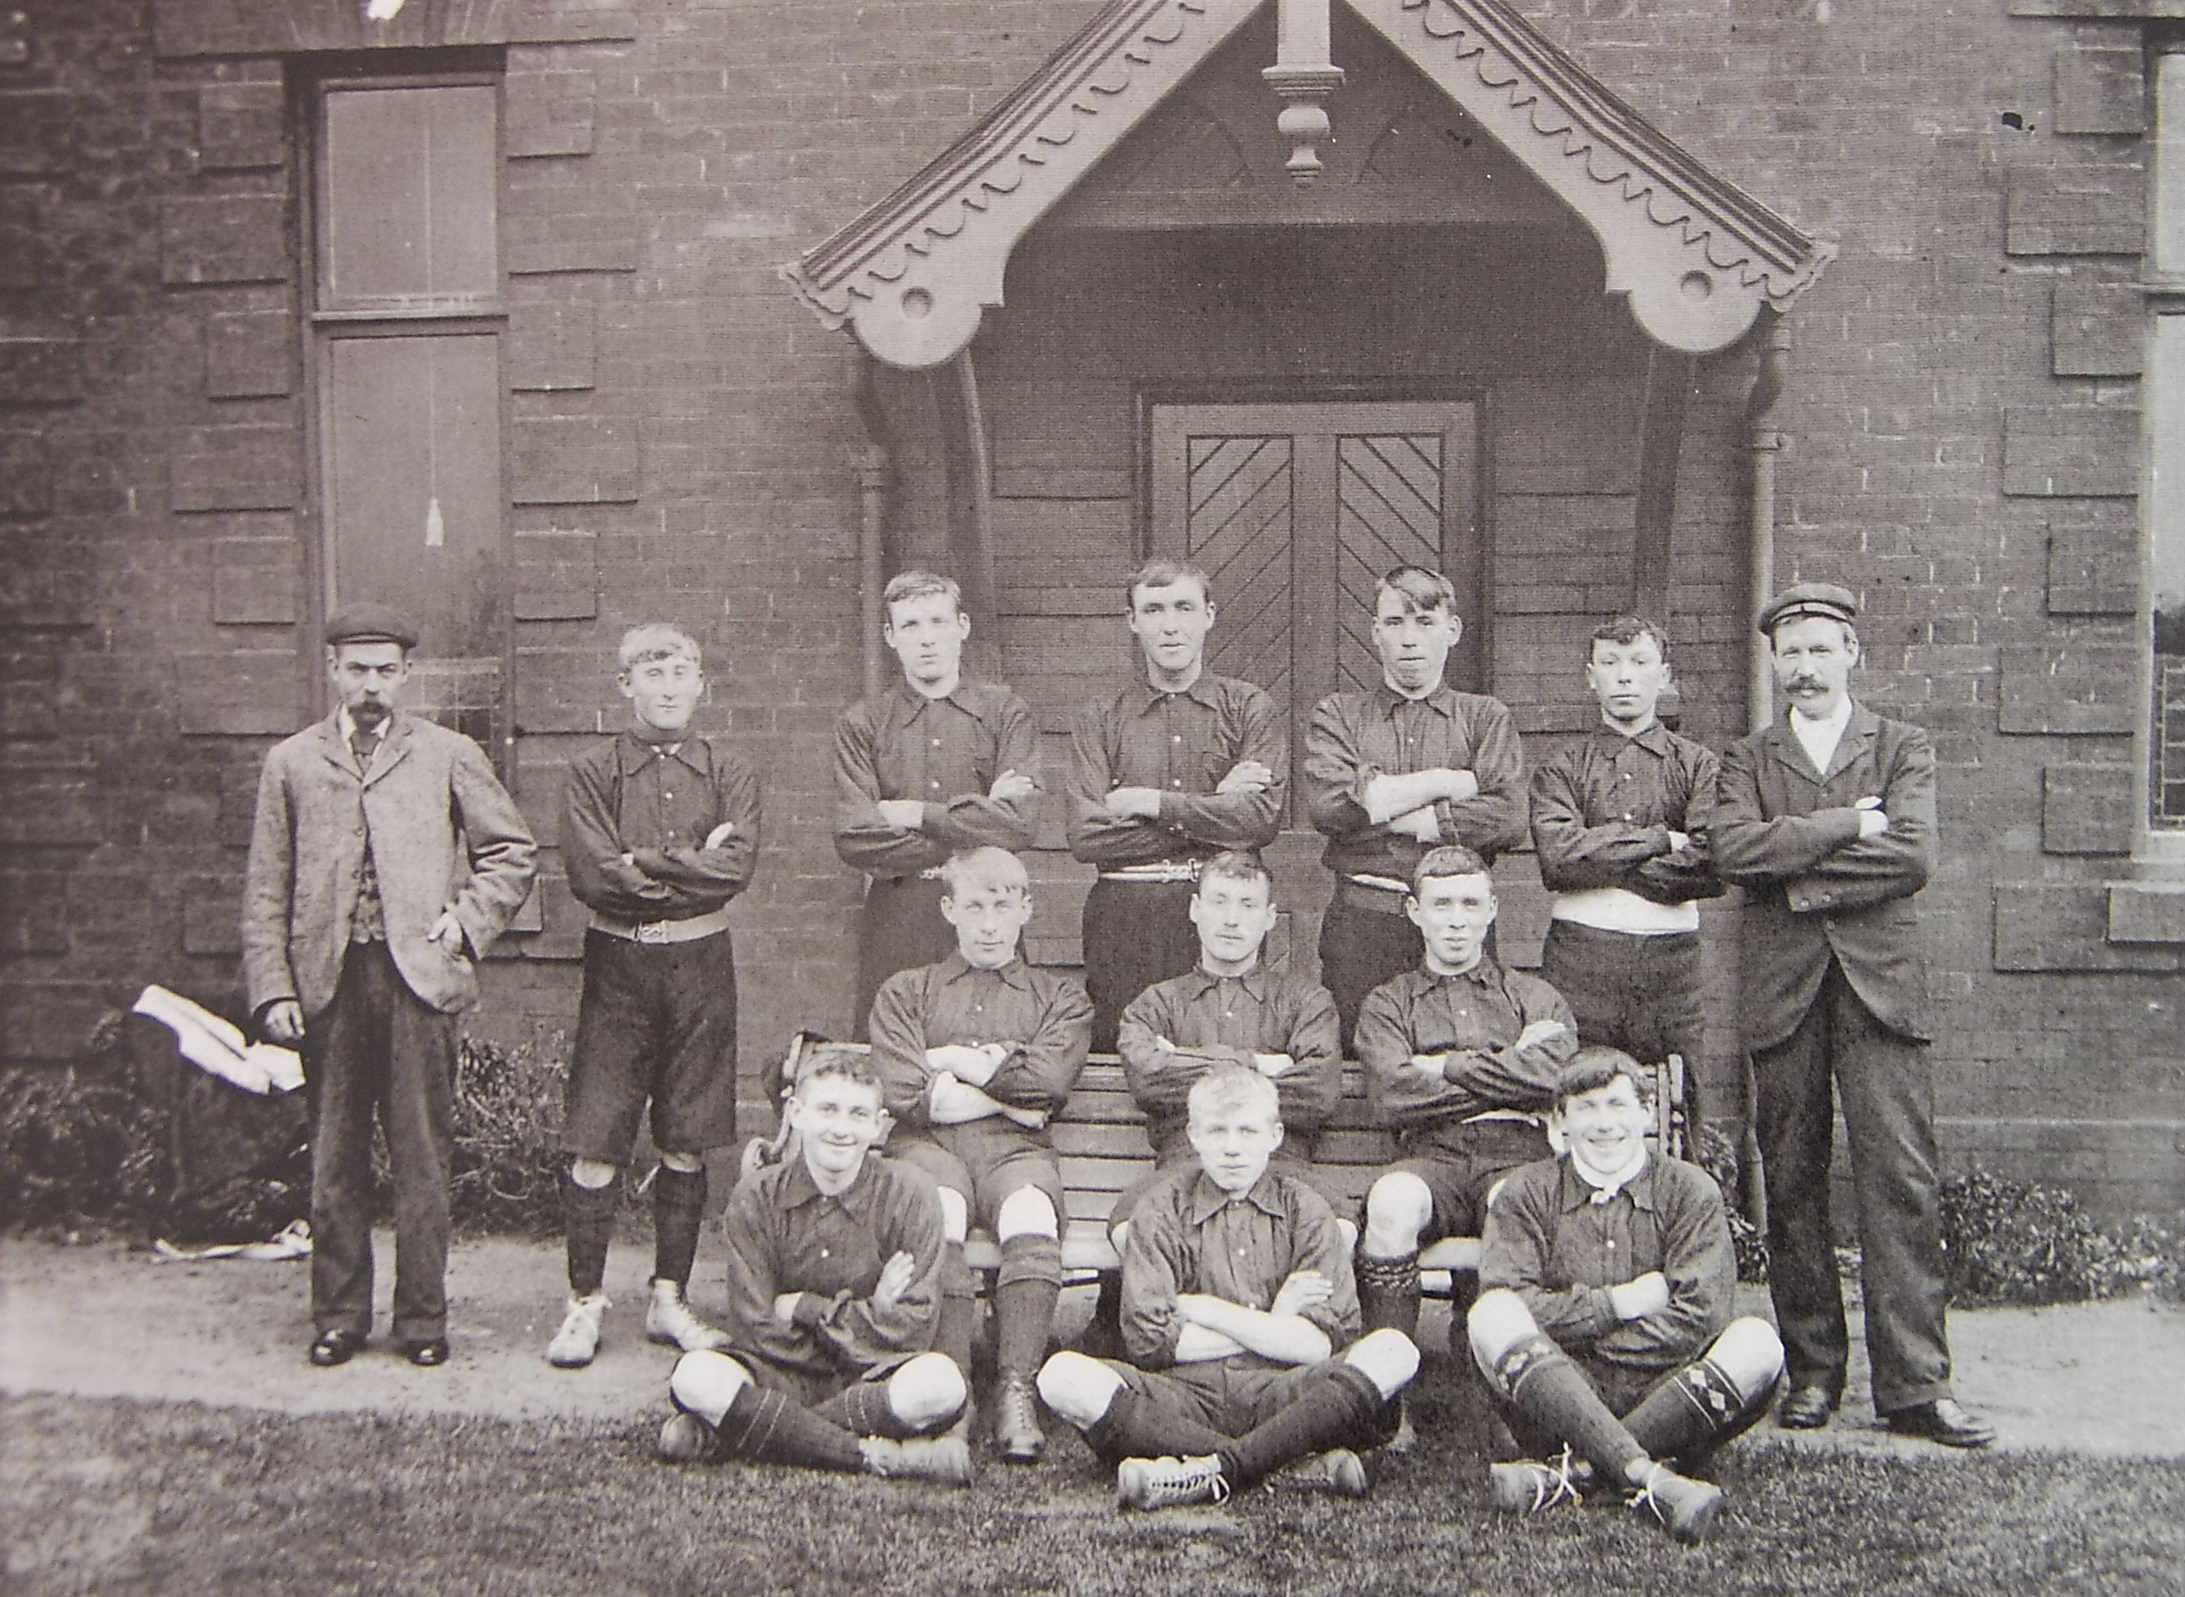 Corton Football Club abt 1900